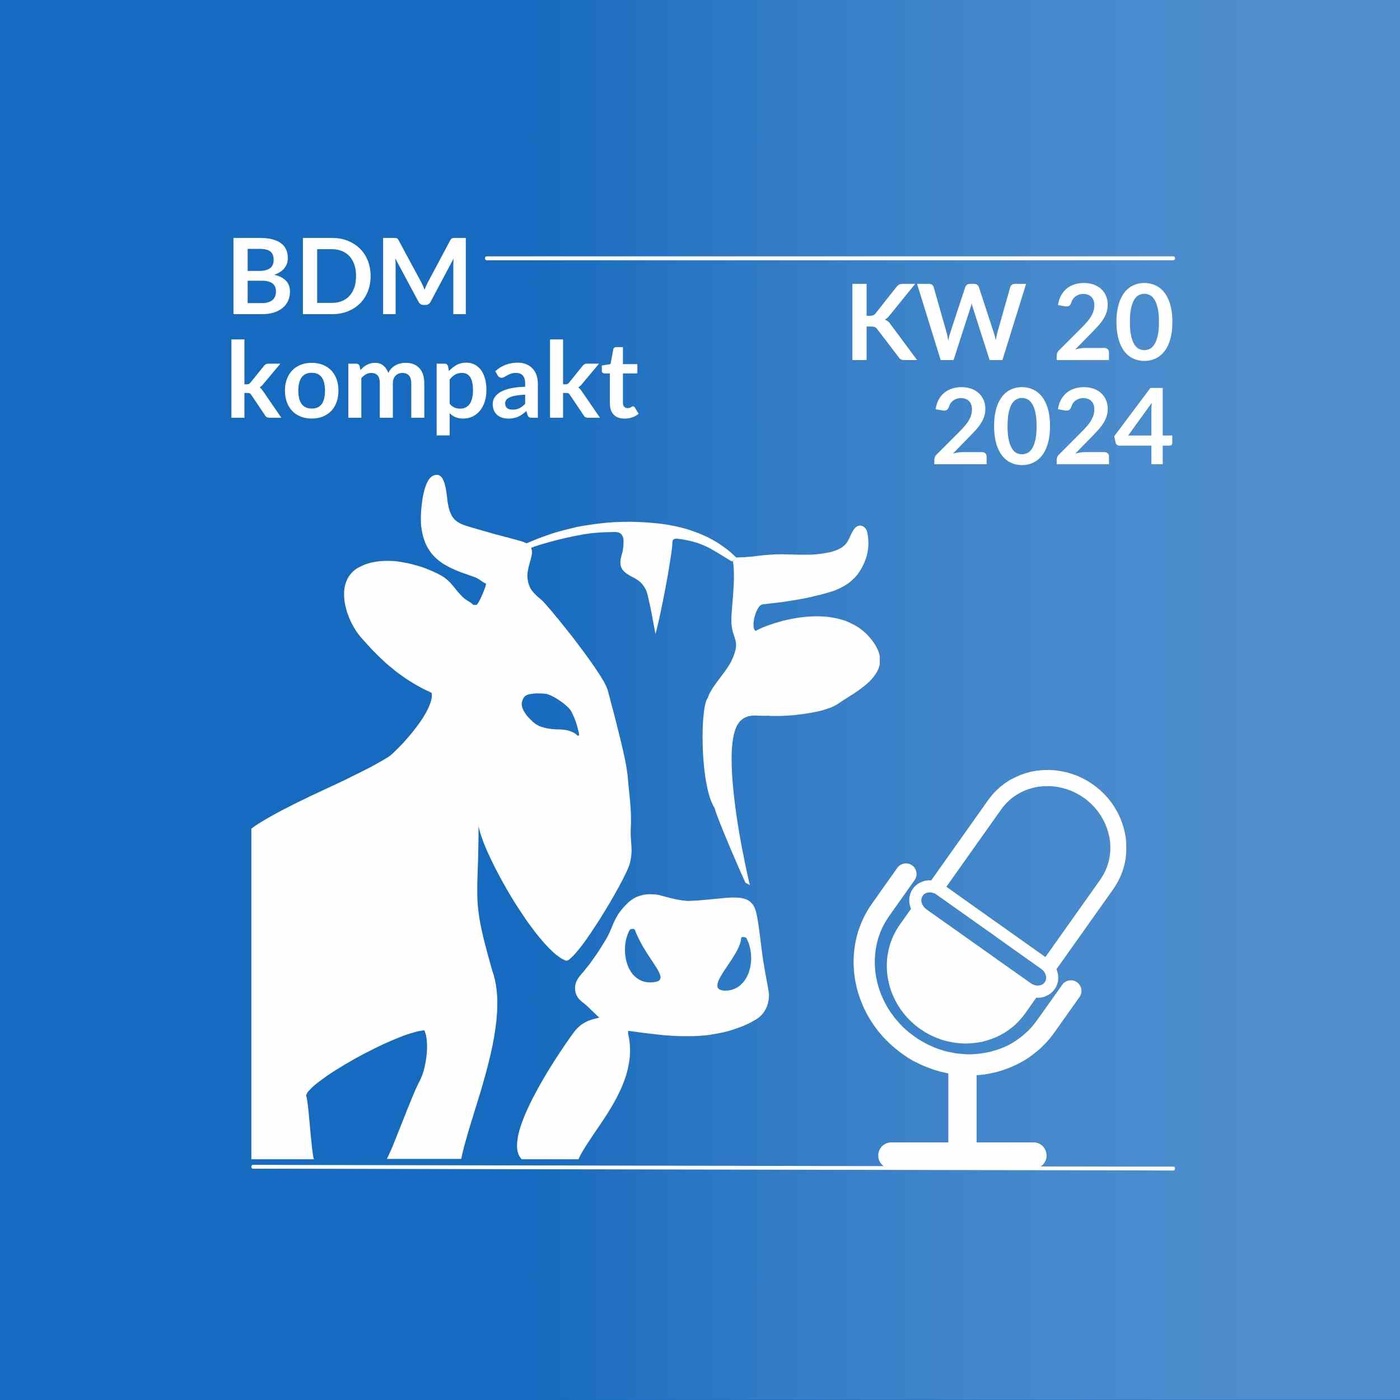 BDM kompakt KW 20/2024